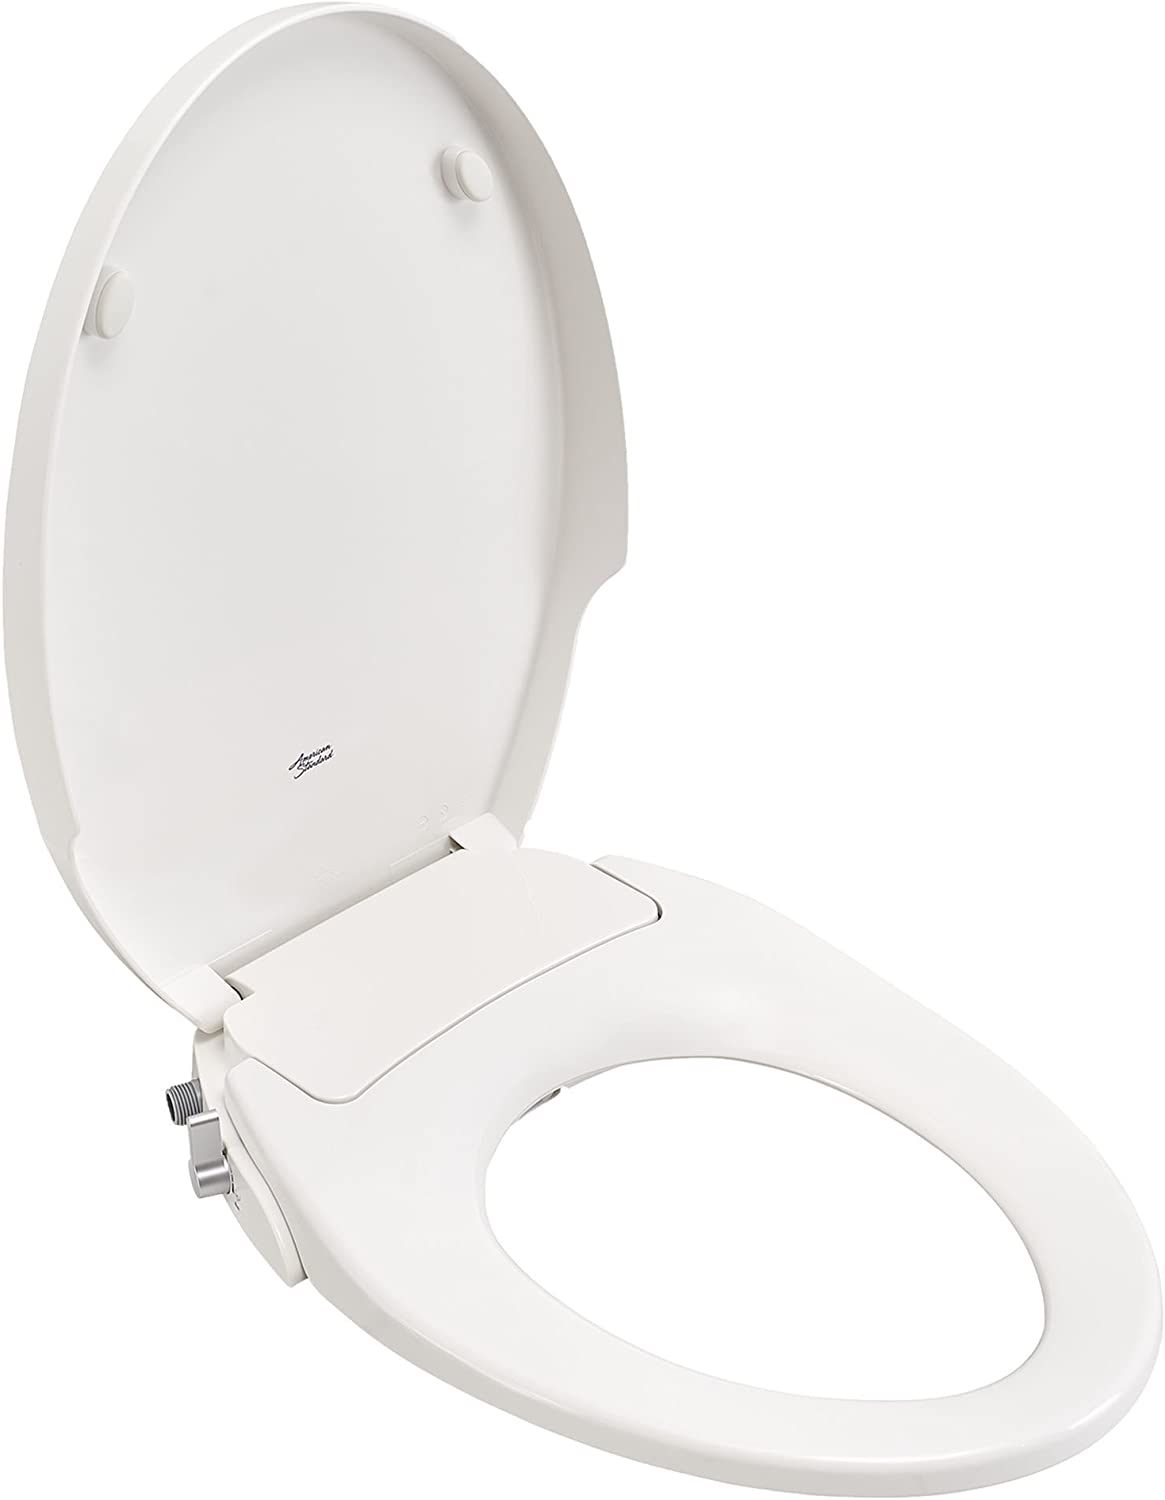 American Standard Adjustable Spray Manual Bidet Toilet Seat